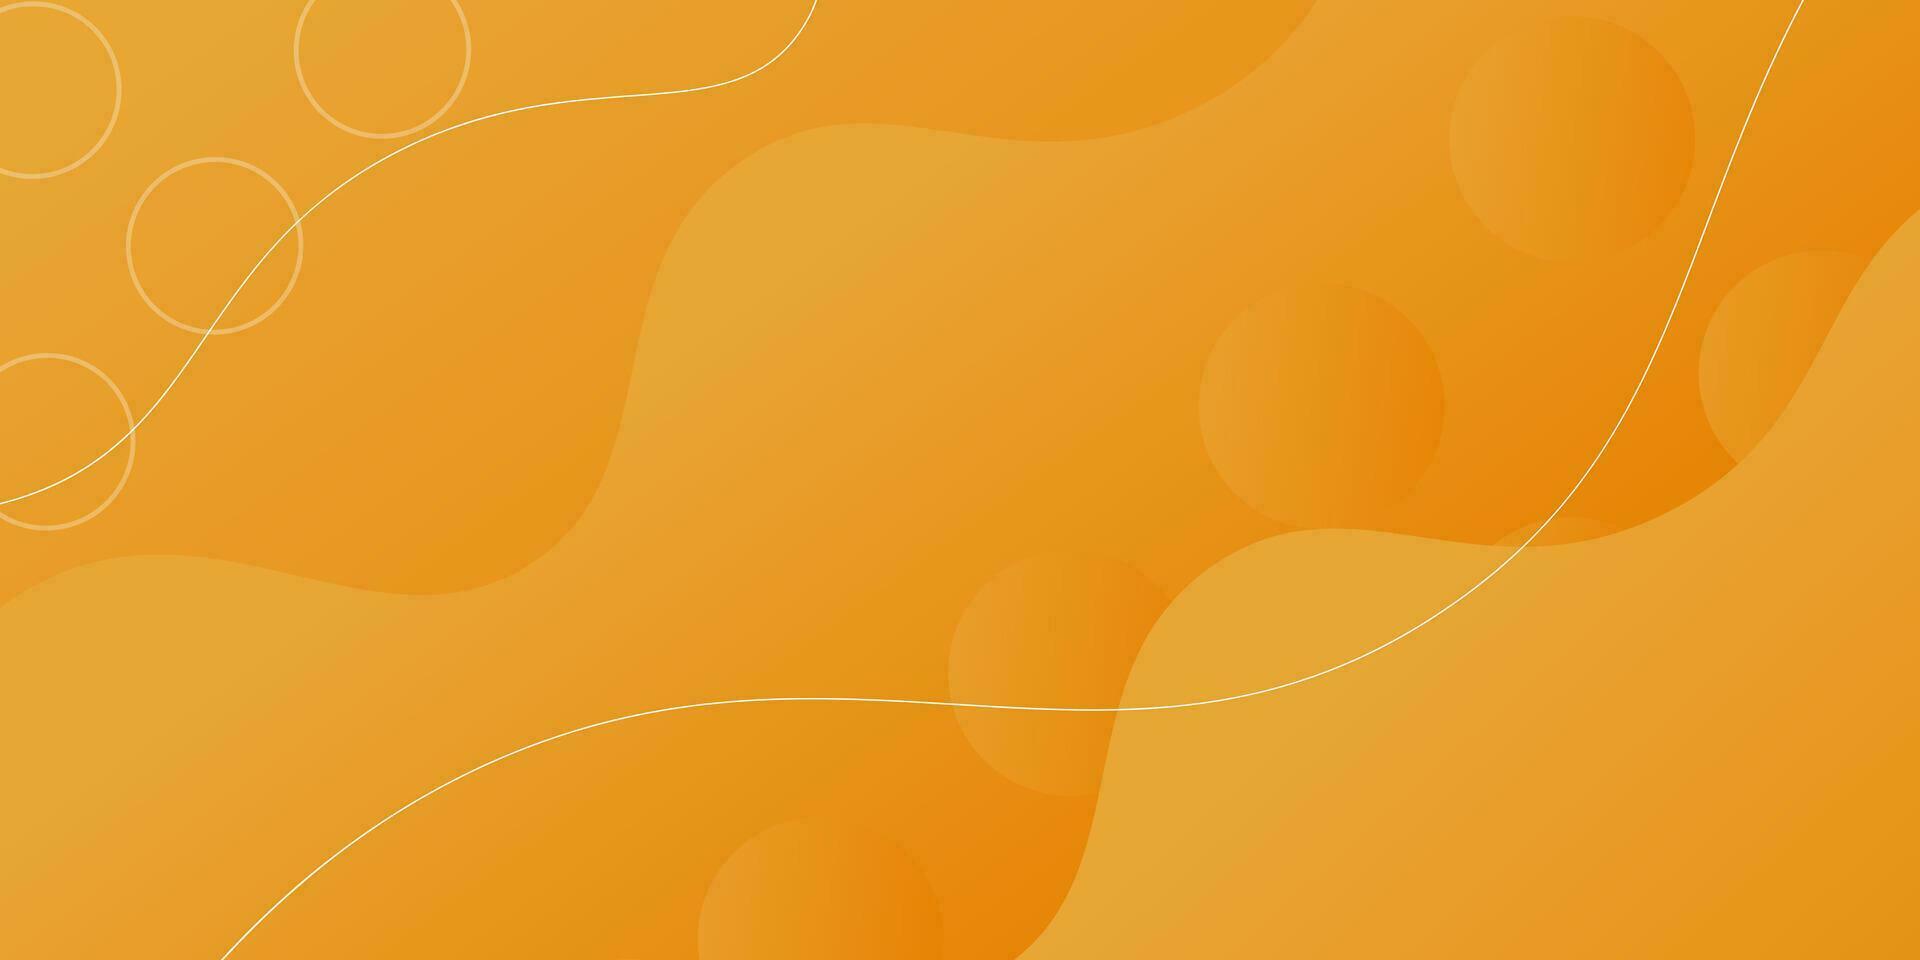 modern abstract curve orange background illustration vector